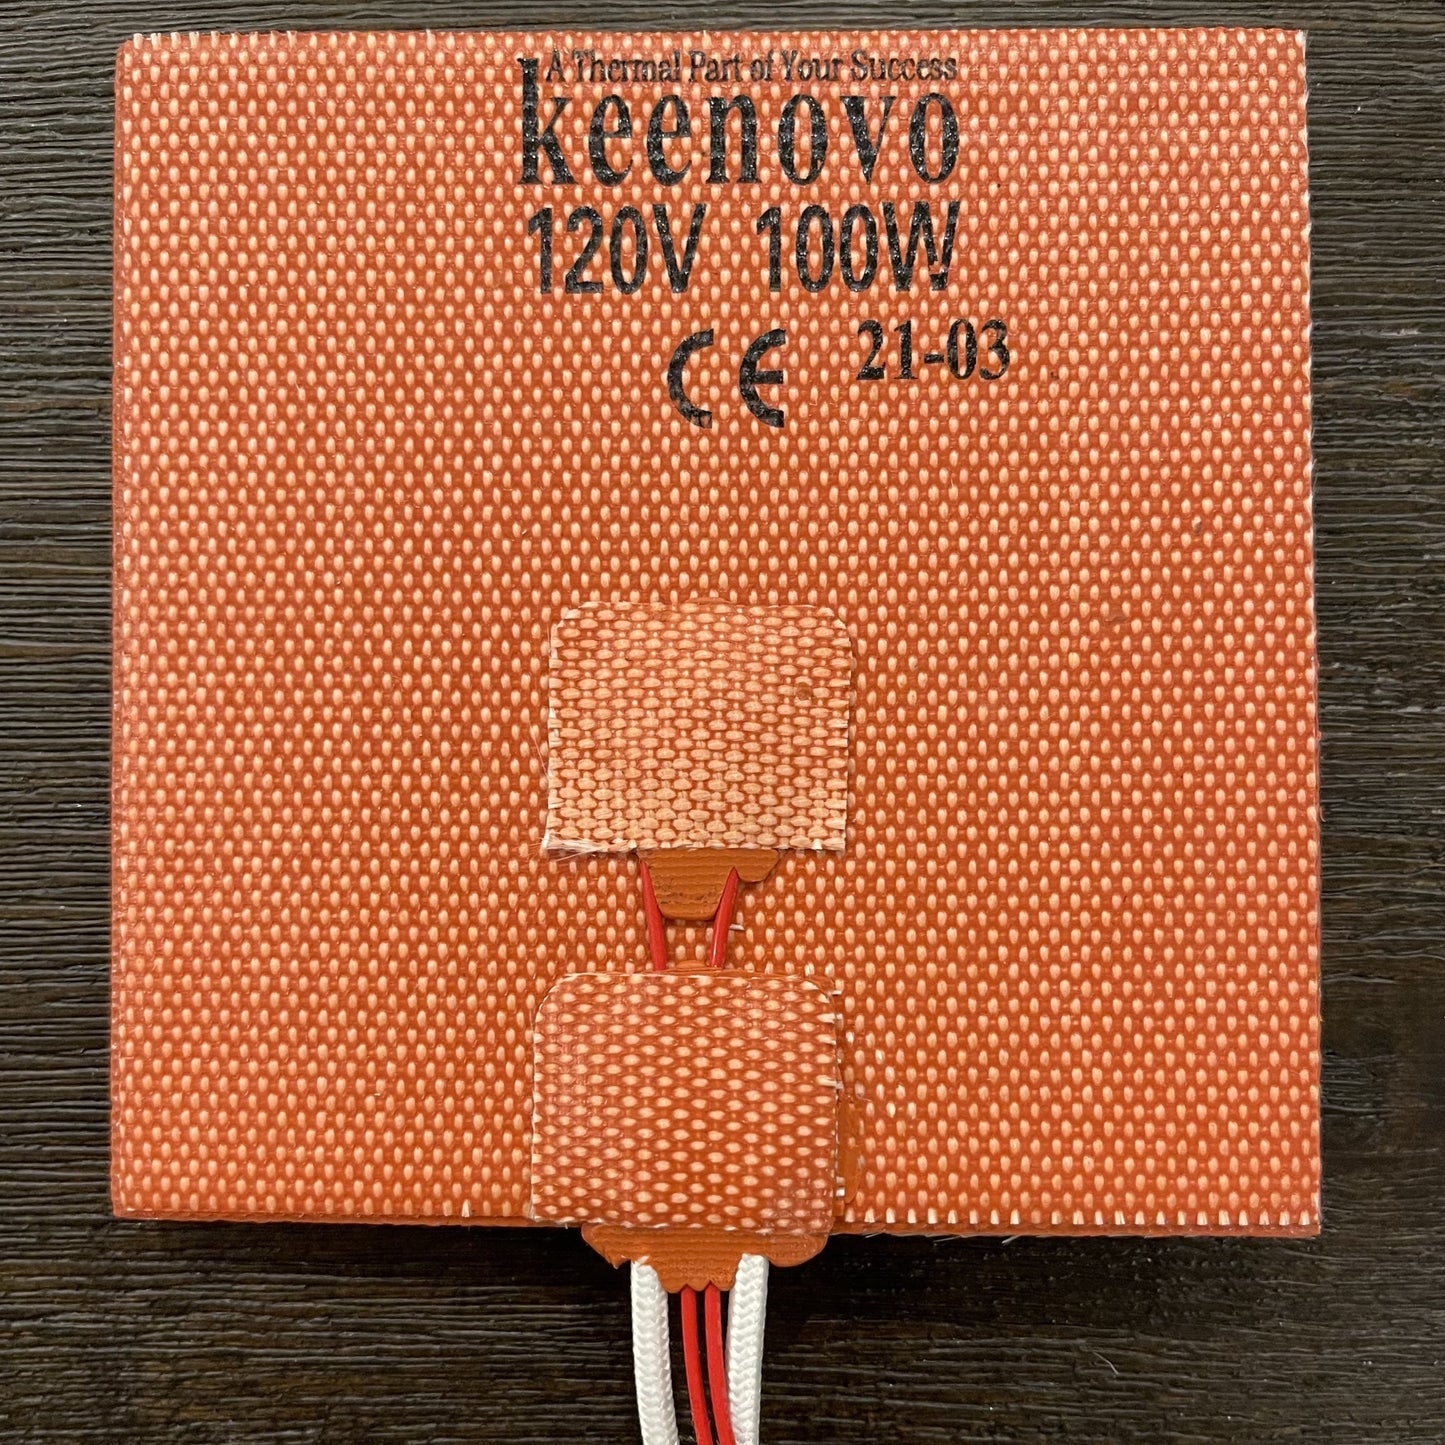 Keenovo Silicone Heater